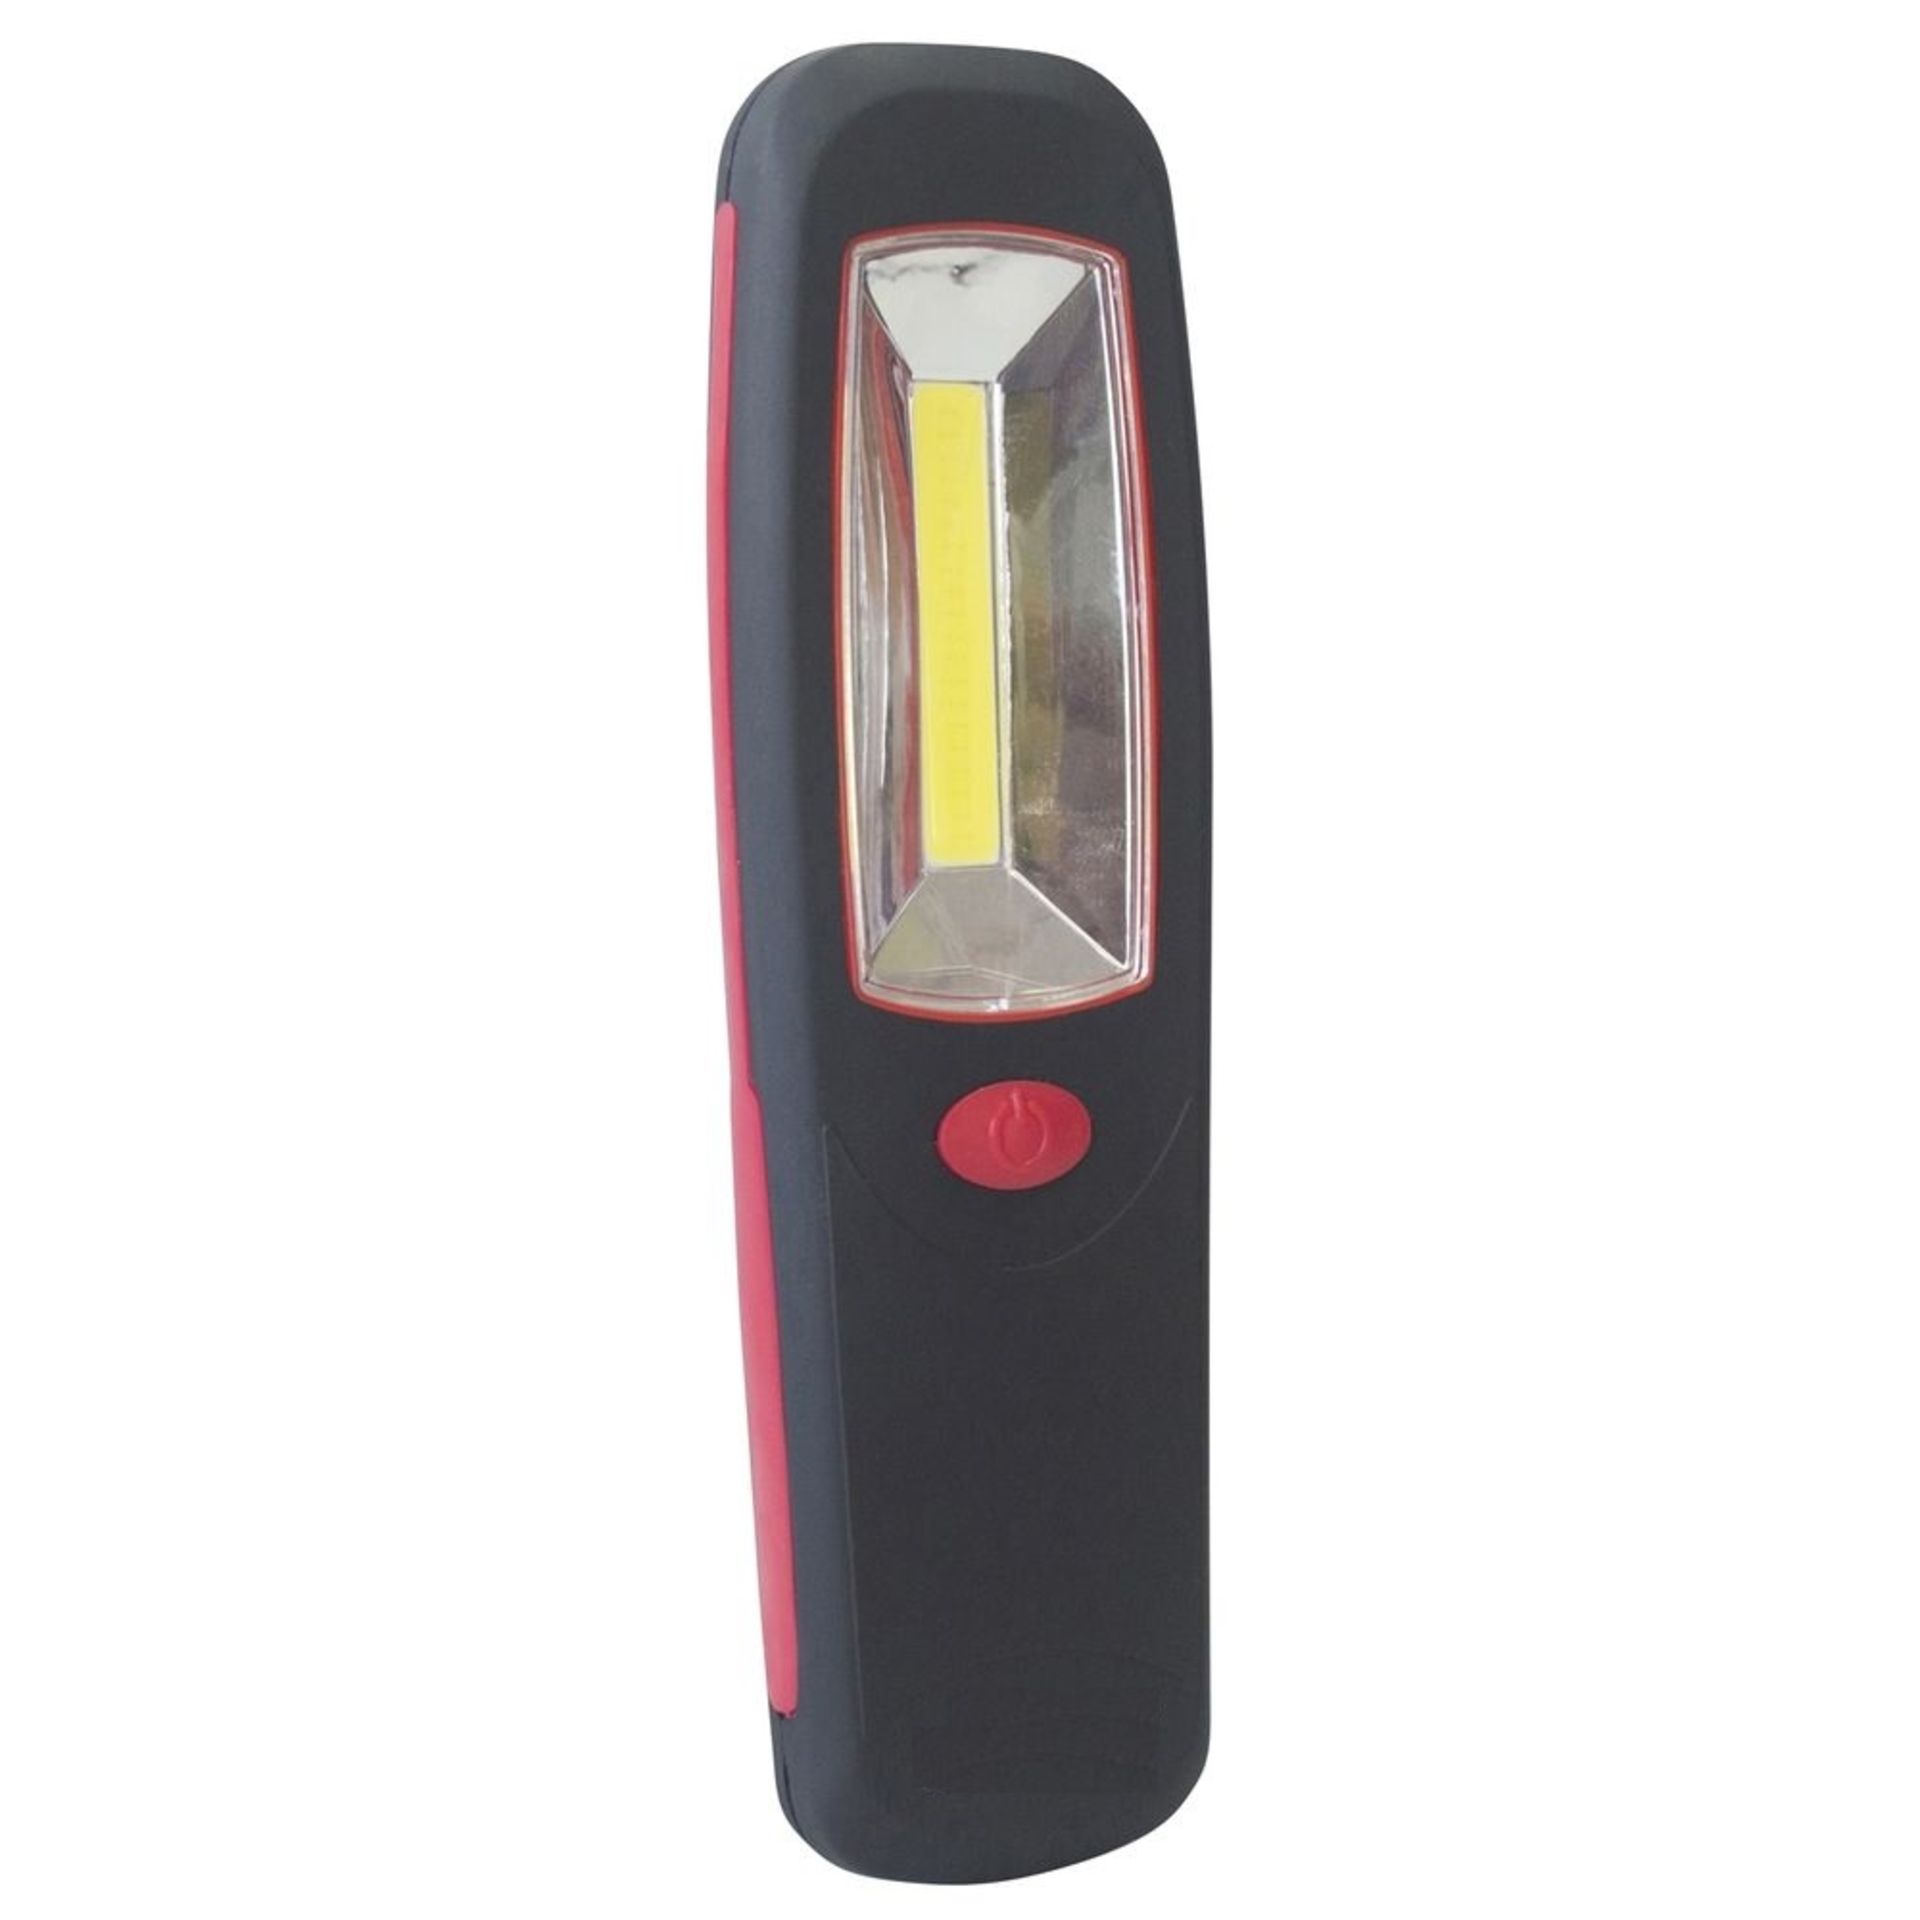 V Brand New 5 Watt COB Worklight With Bright 250 Lumen Light - Hook & Magnet For Hands Free Use X